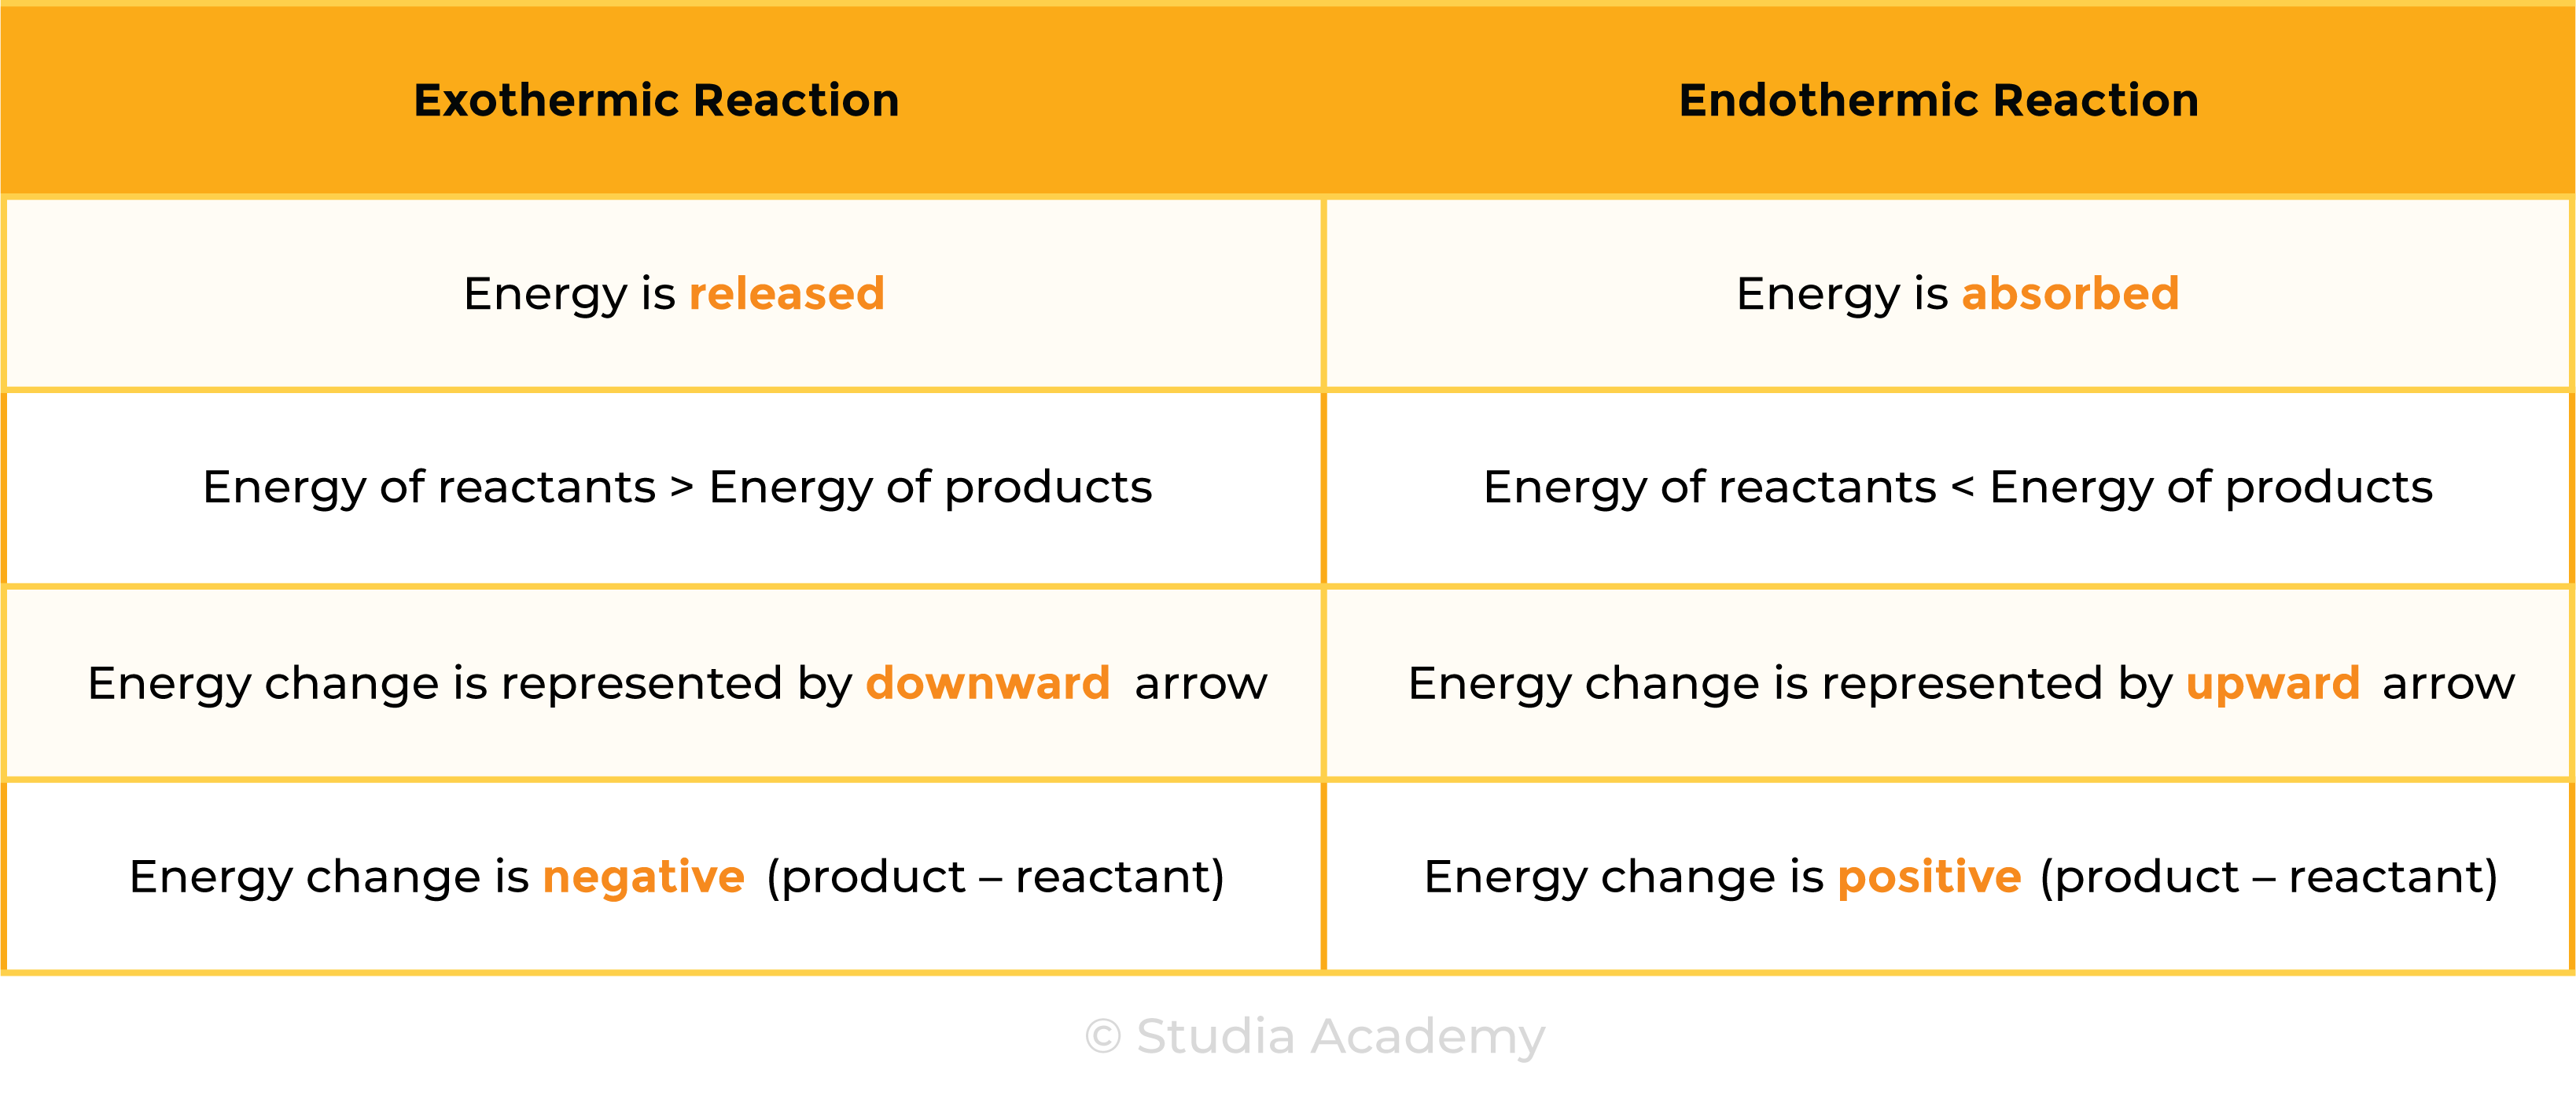 edexcel_igcse_chemistry_topic 18 tables_energetics_002_exothermic and endothermic energy change